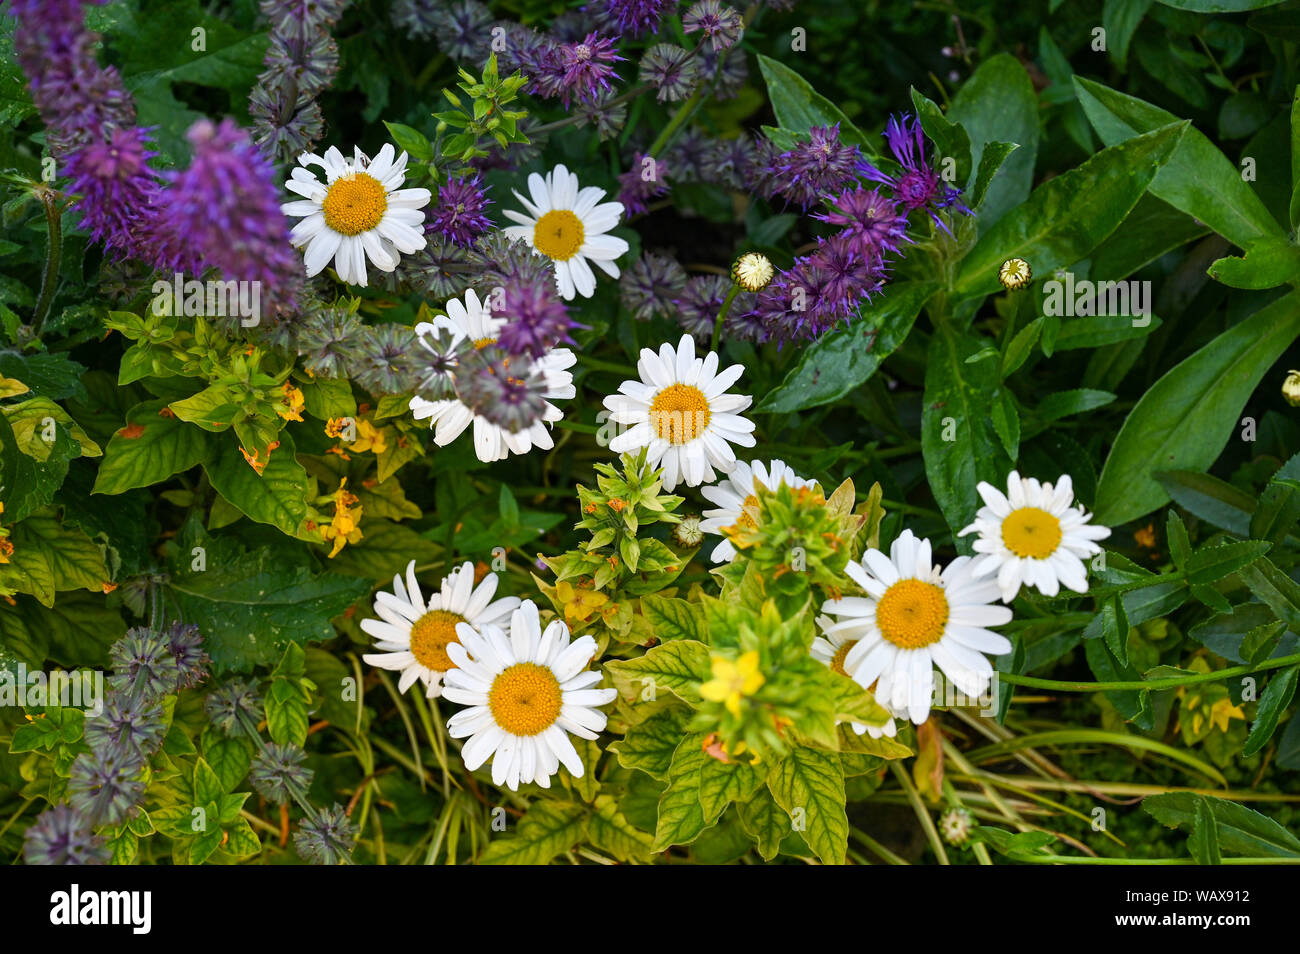 Garden plants and flowers Brighton Sussex UK - White daisies Stock Photo